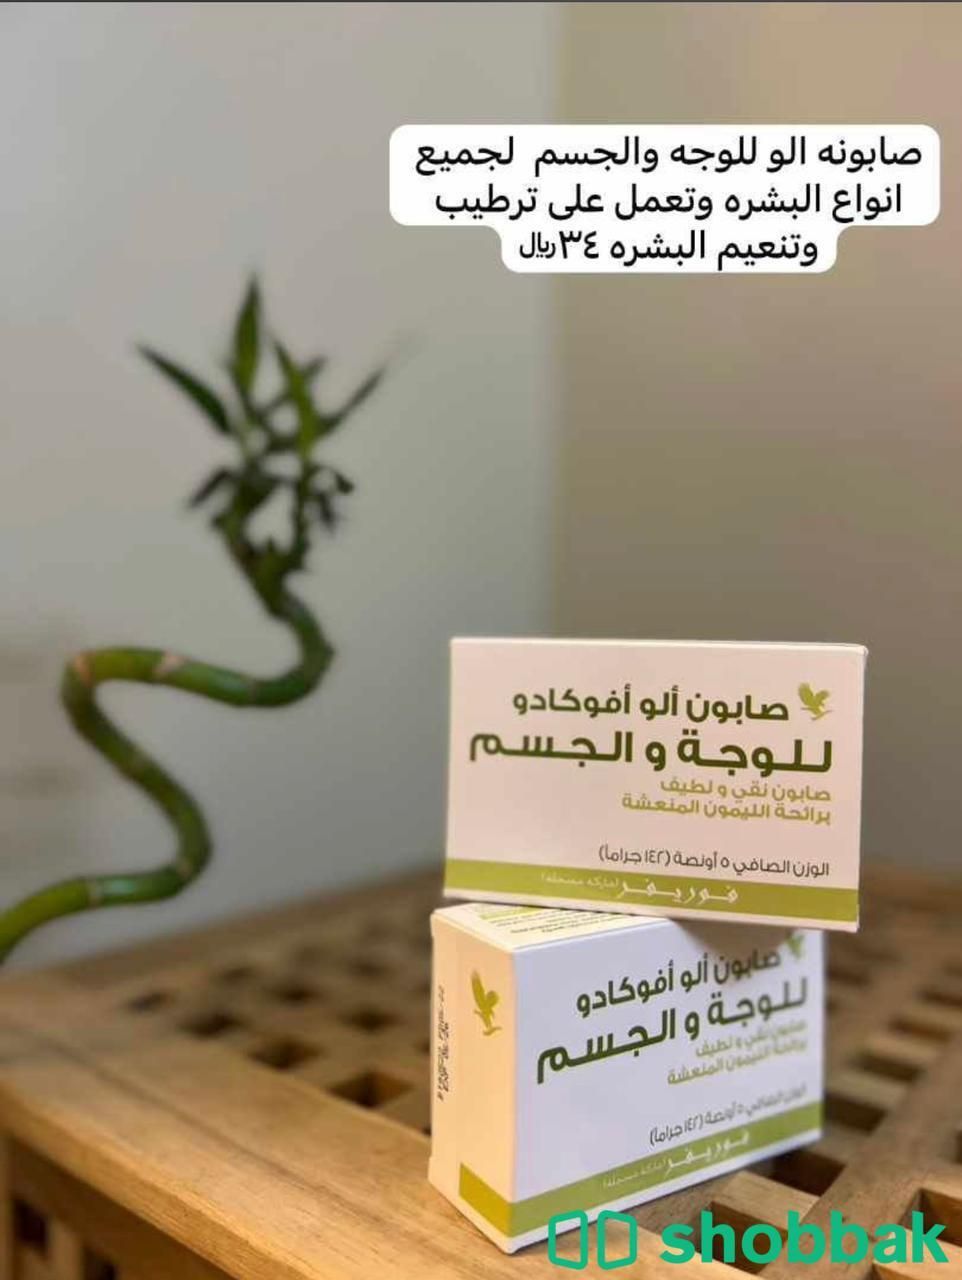 منتجات شركةفوريڤر  Shobbak Saudi Arabia